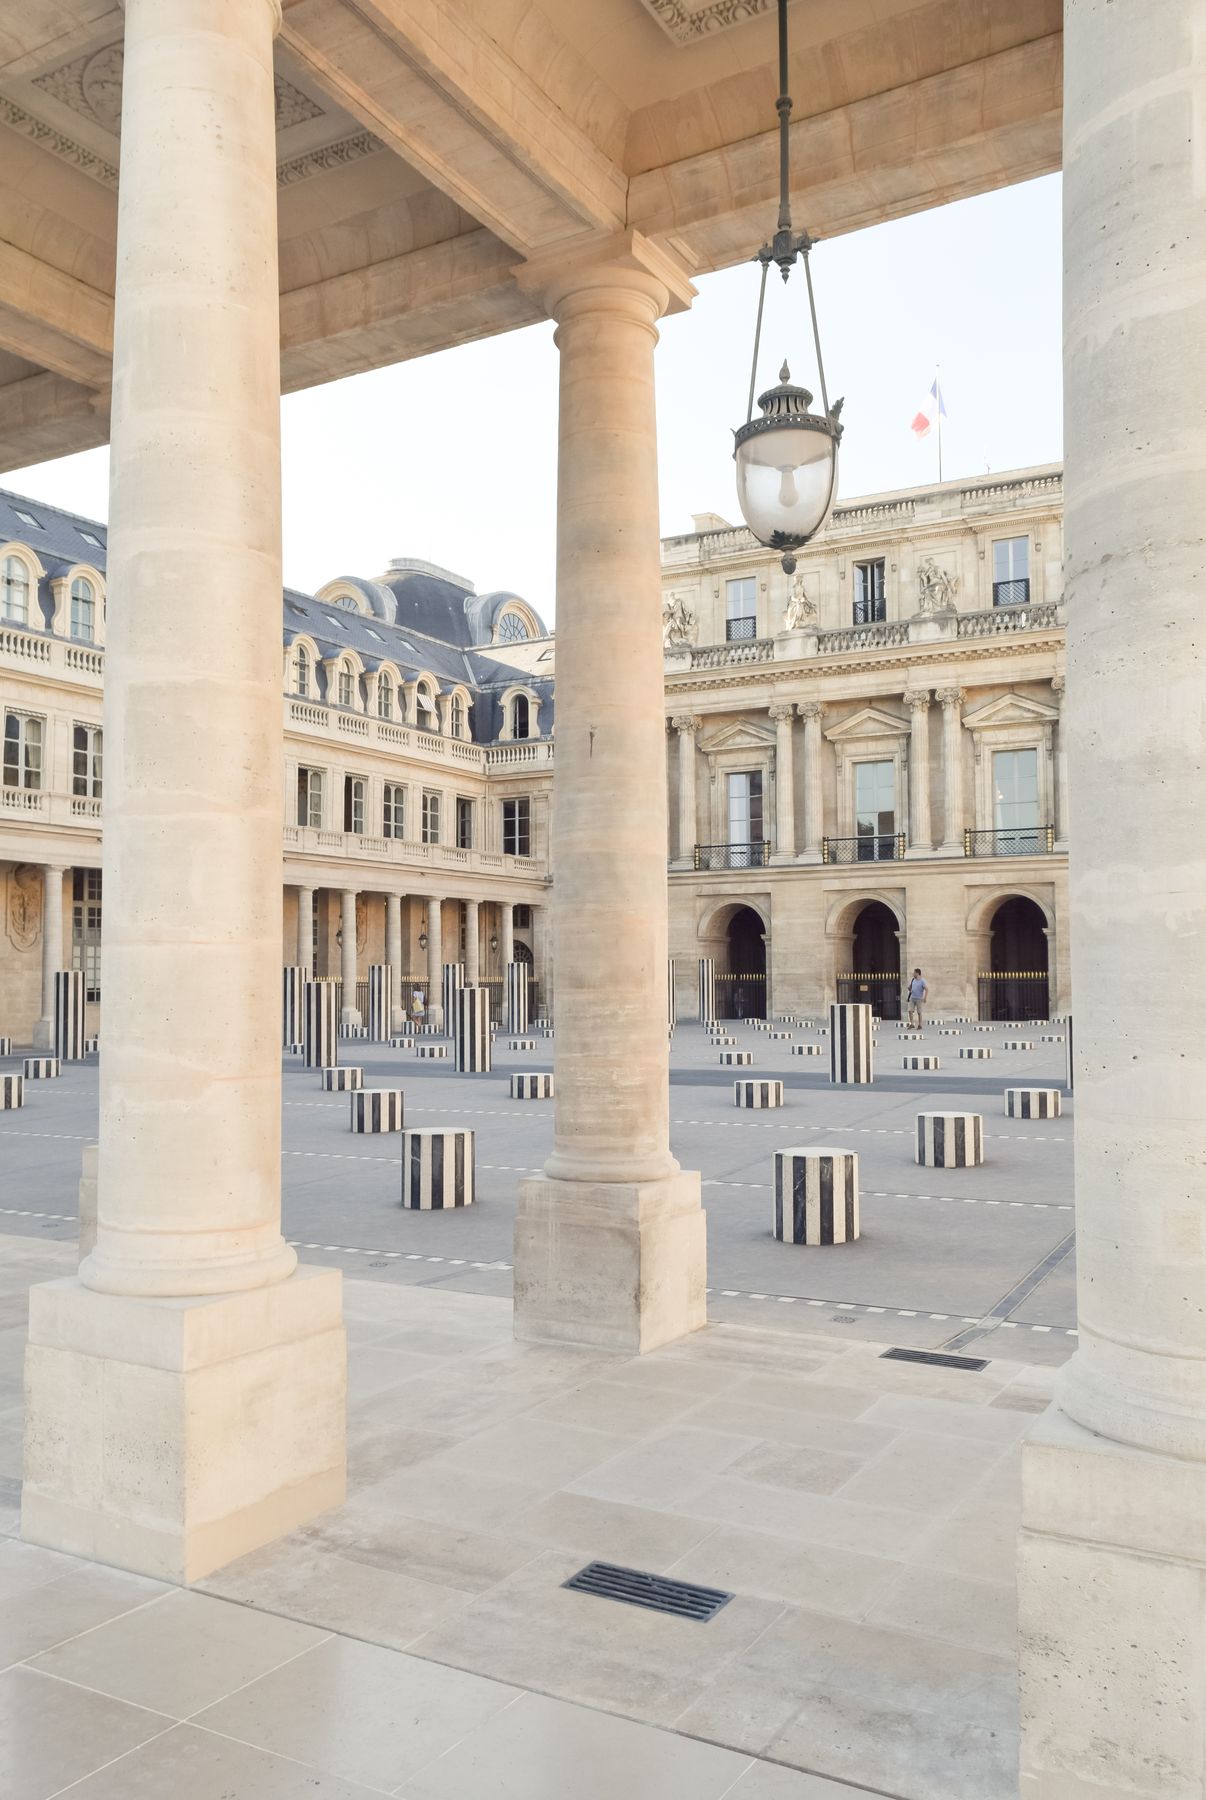 Palais Royal Paris: a former royal palace turned public garden